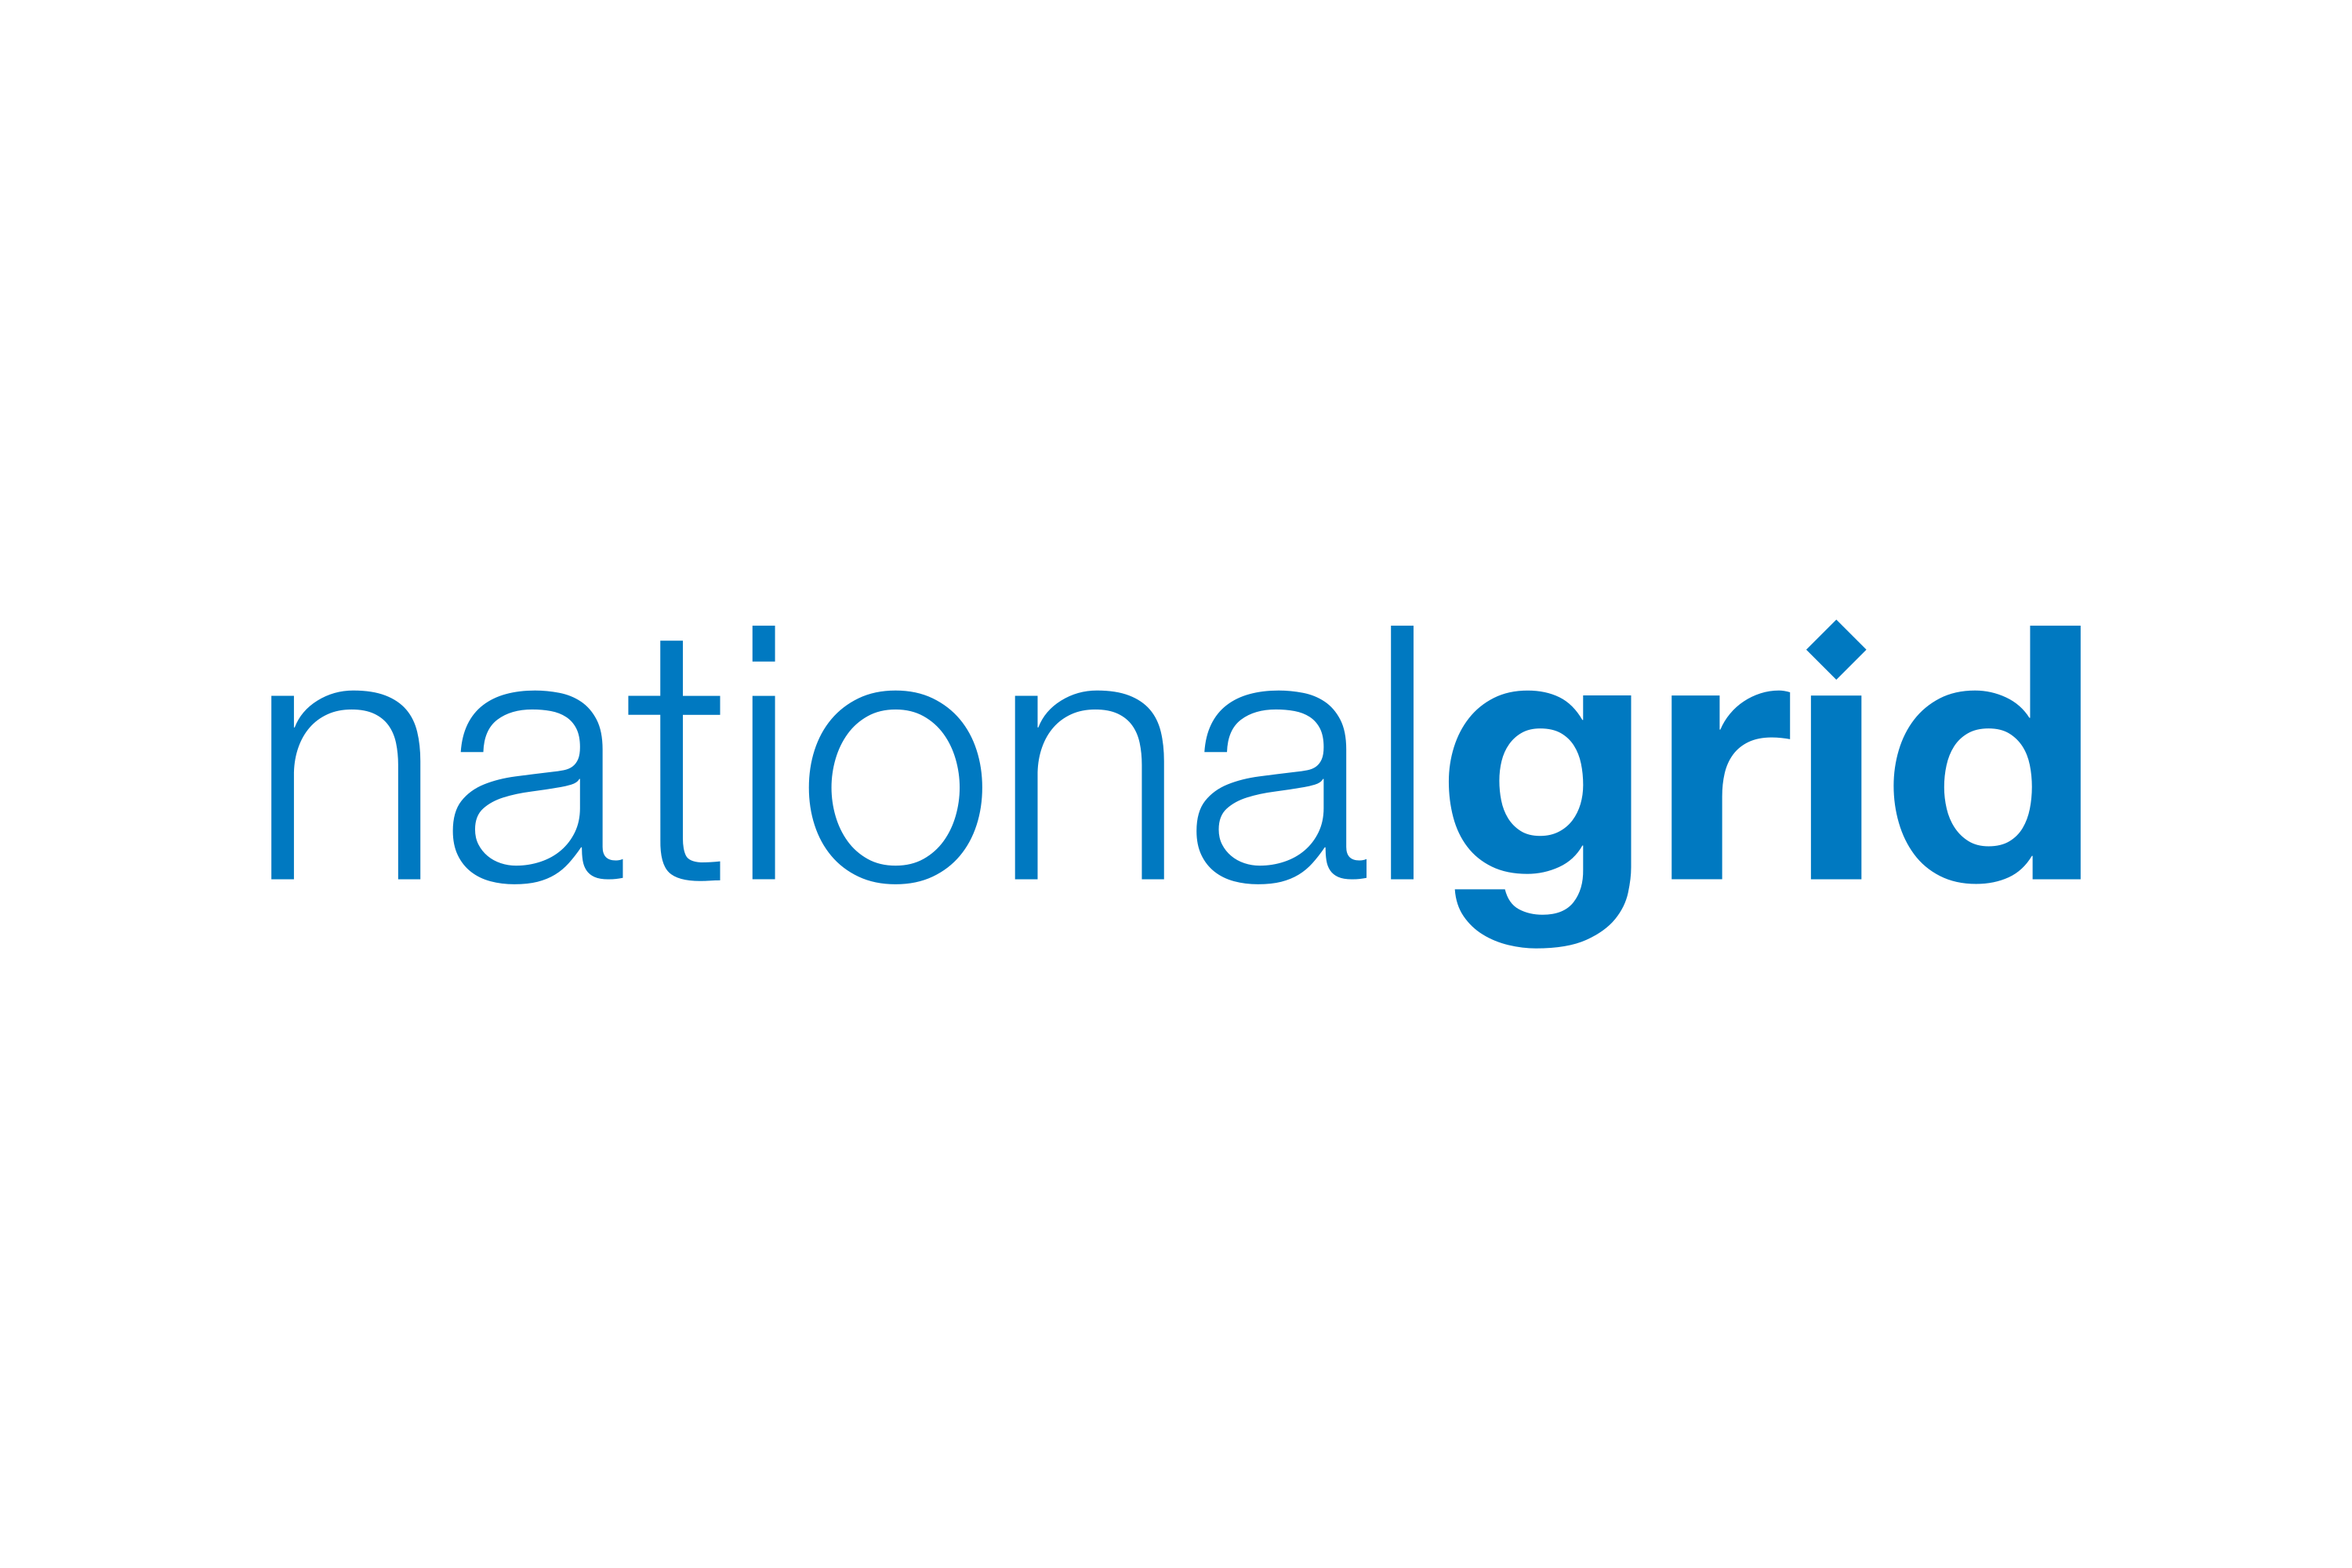 National-Grid